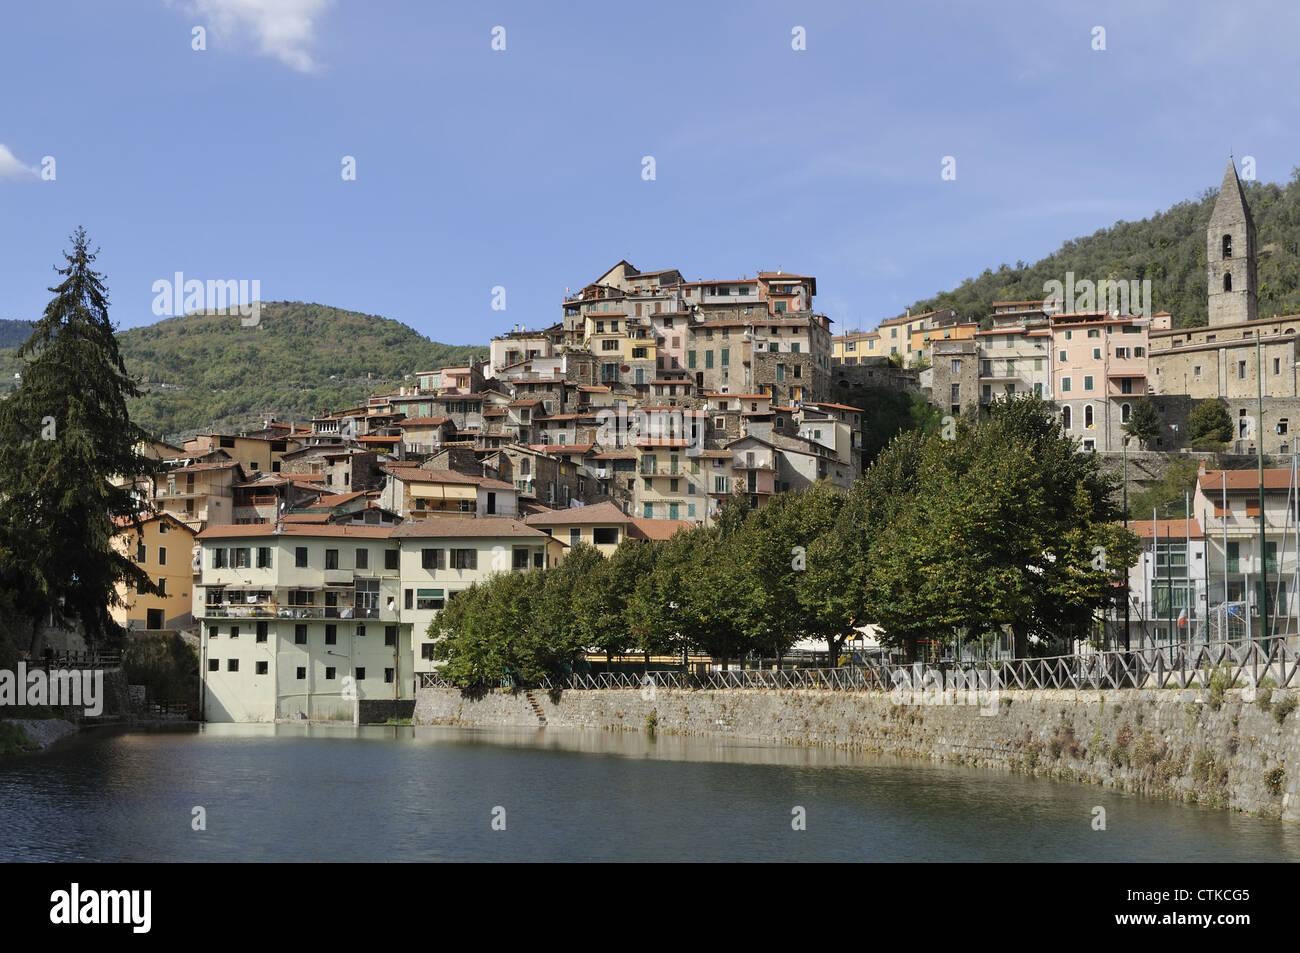 Pigna village and lake, Liguria view of medieval Mediterranean village in hilly inland landscape Stock Photo